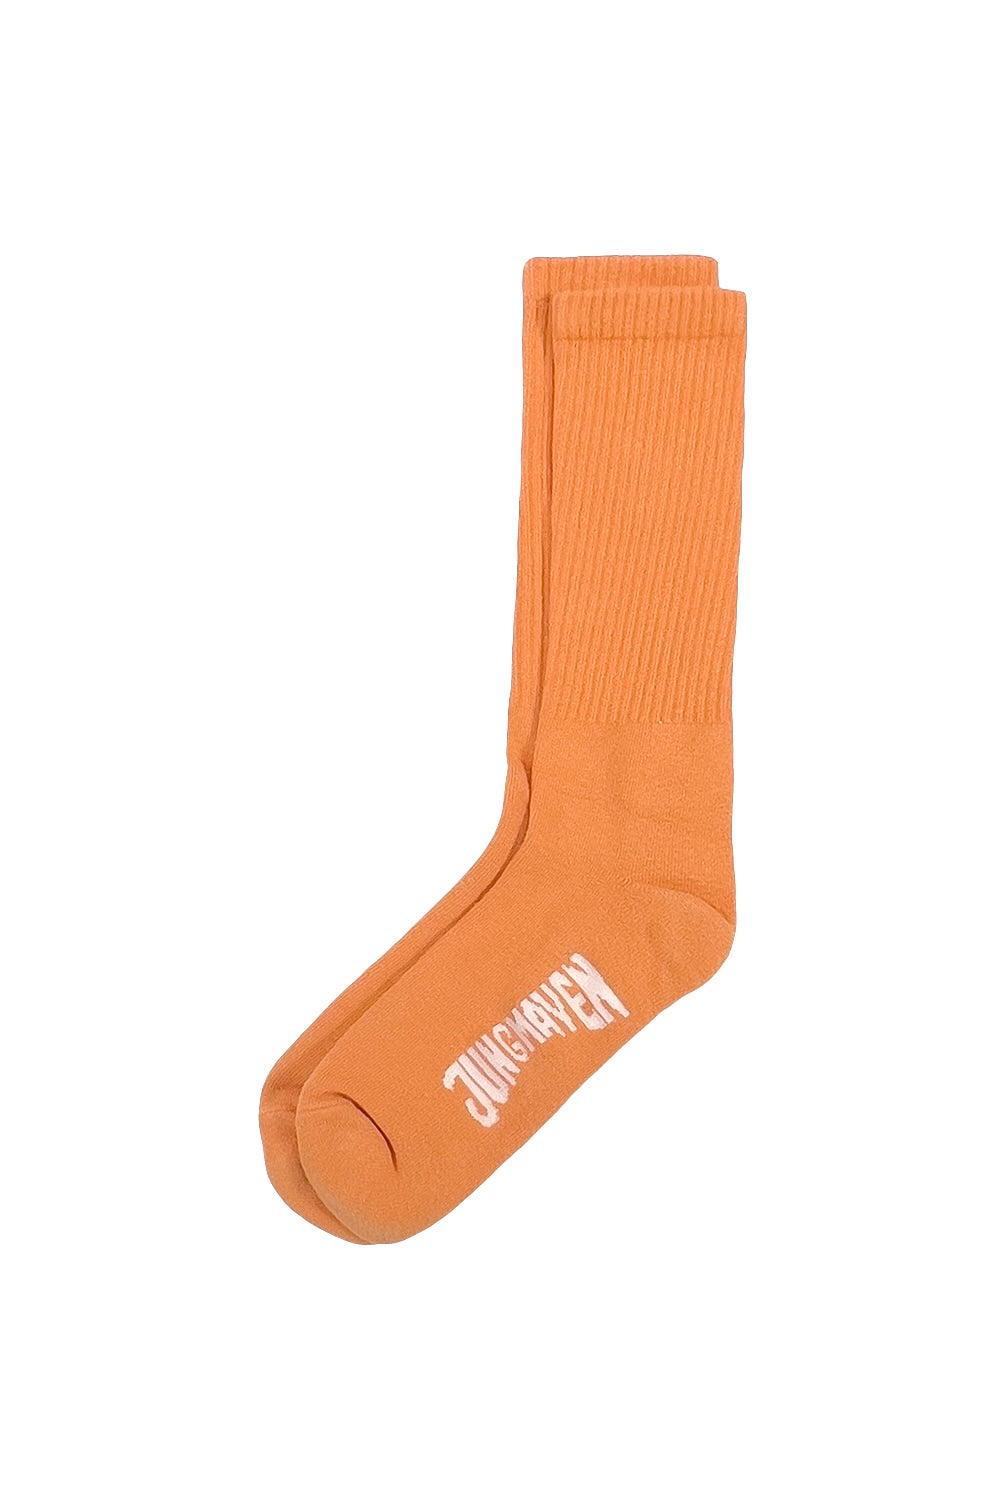 Hemp Crew Socks | Jungmaven Hemp Clothing & Accessories / Color: Apricot Crush